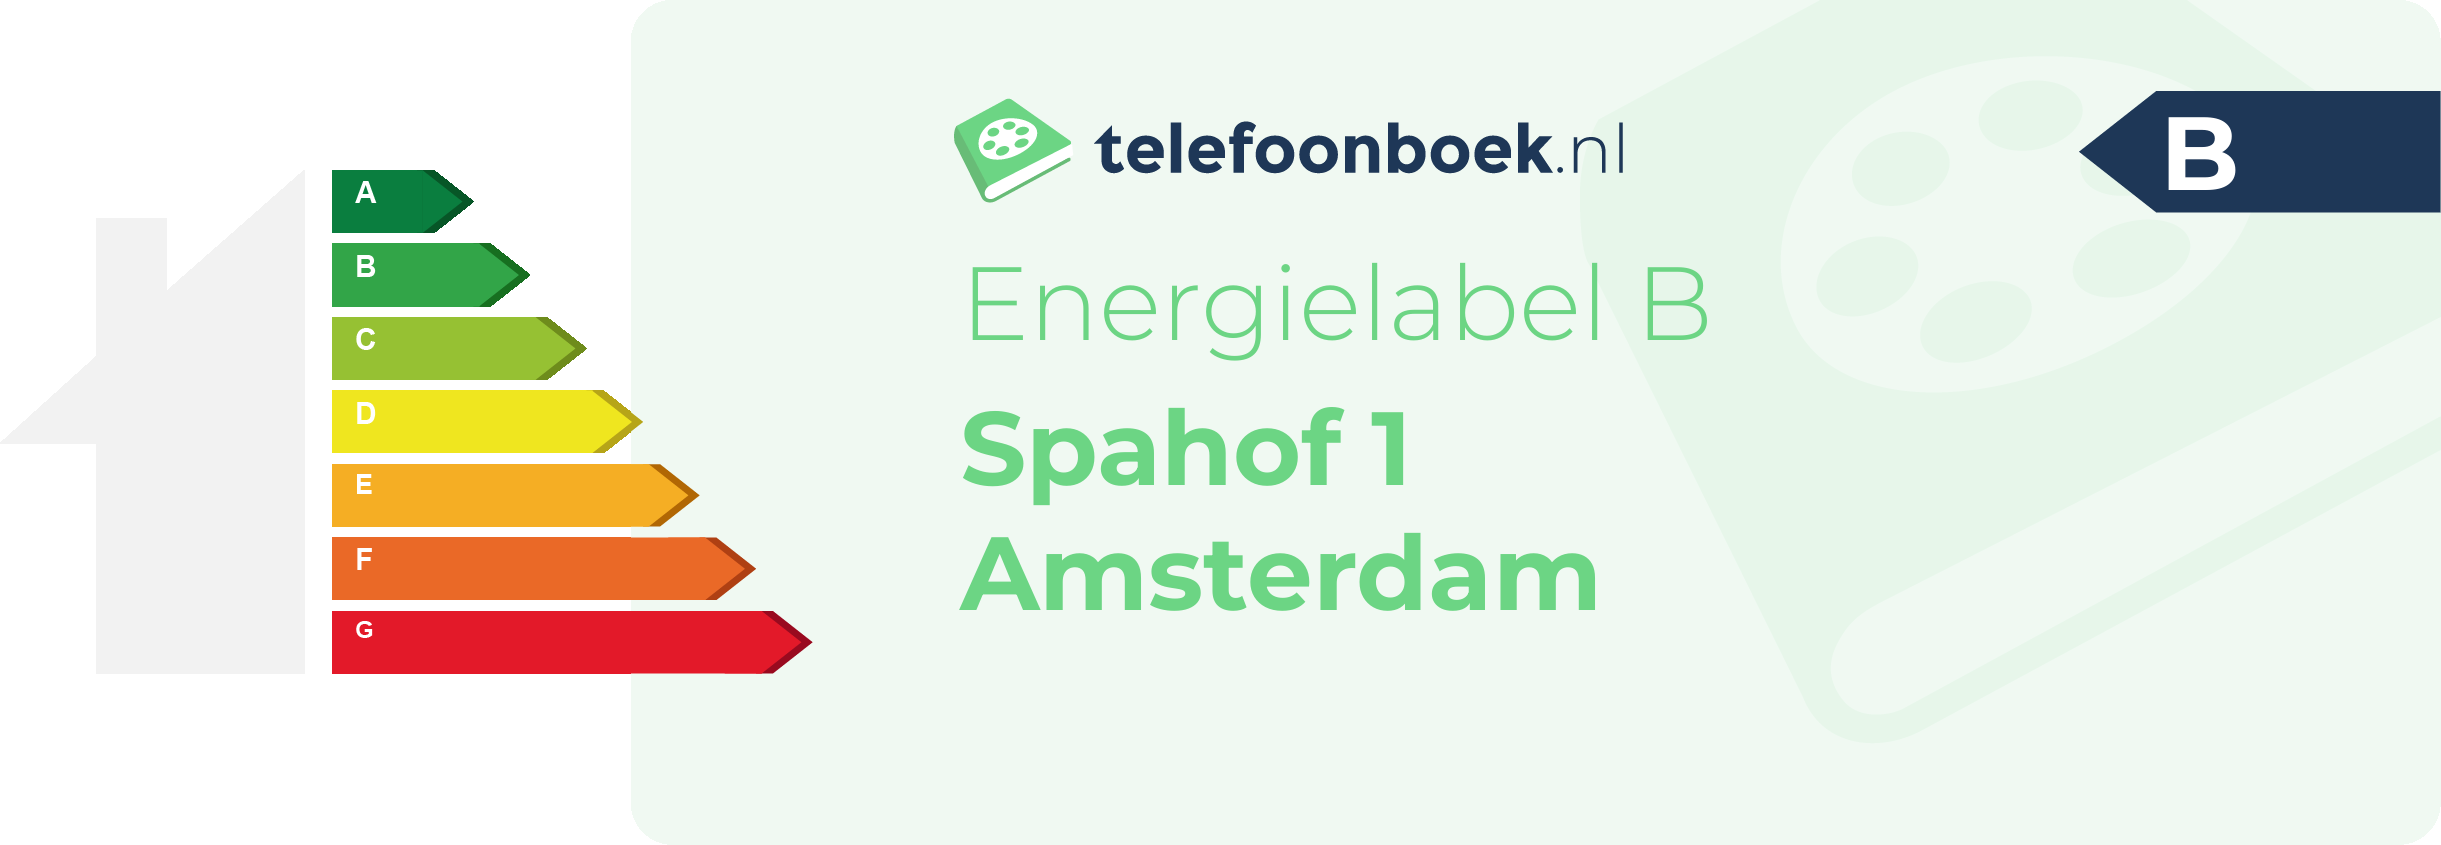 Energielabel Spahof 1 Amsterdam